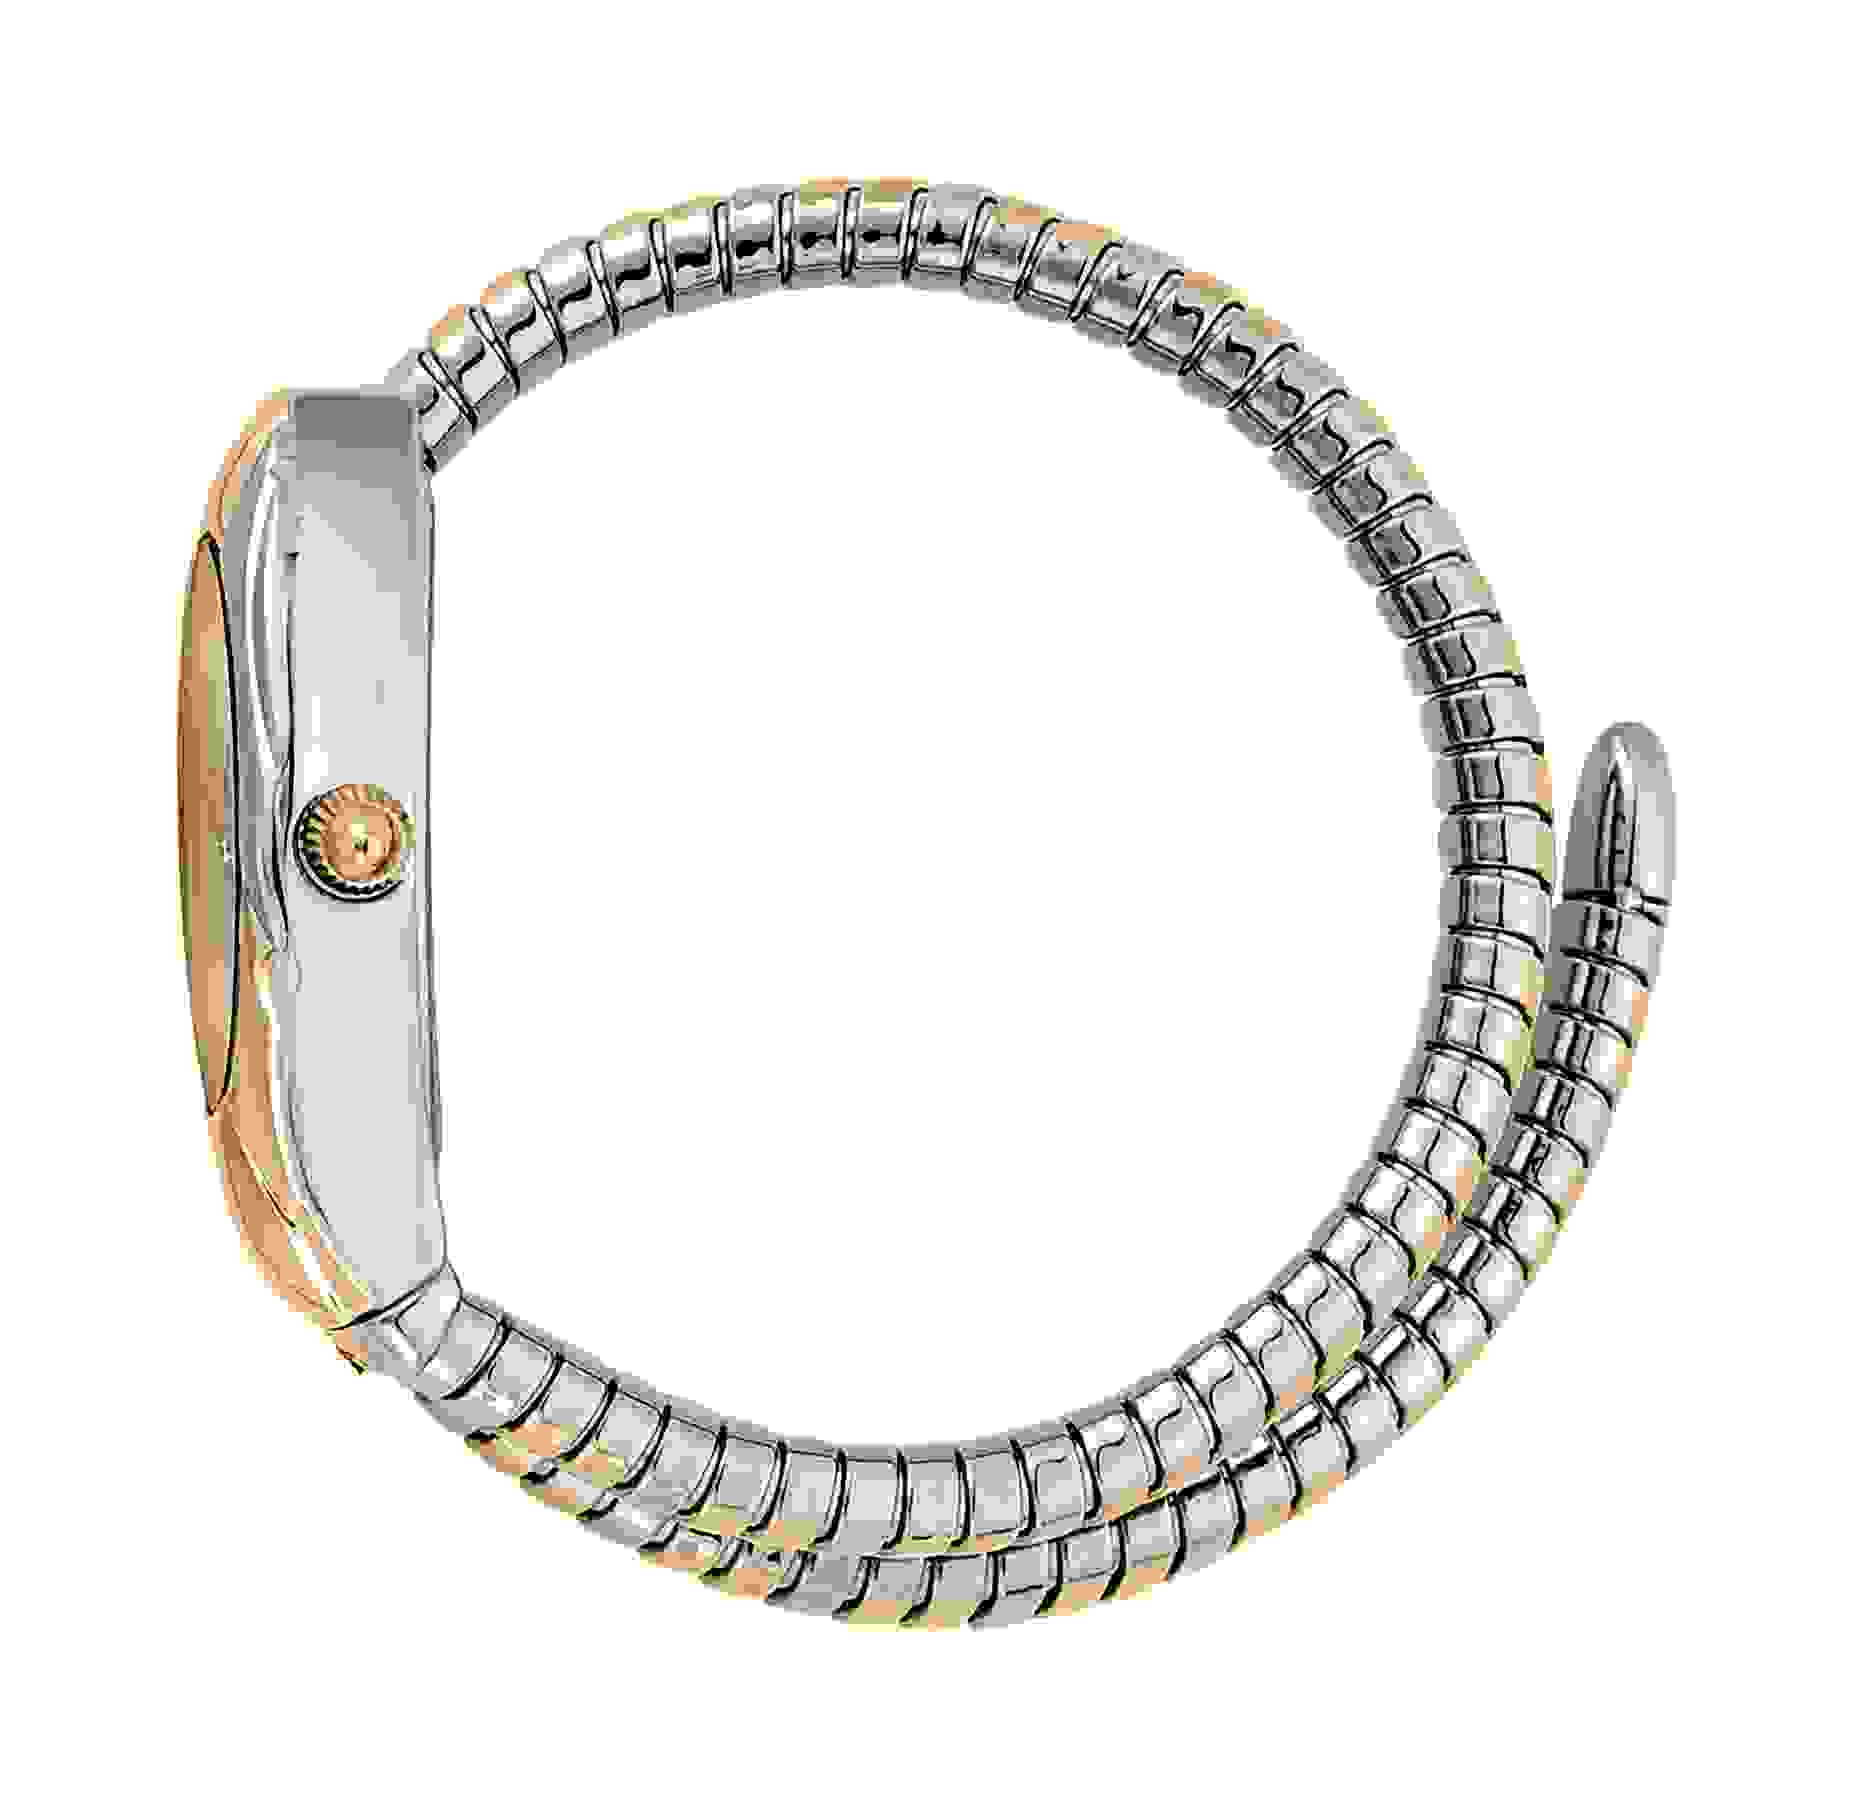 Just Cavalli Signature Snake Watch Gold/Silver JC1L182M0025